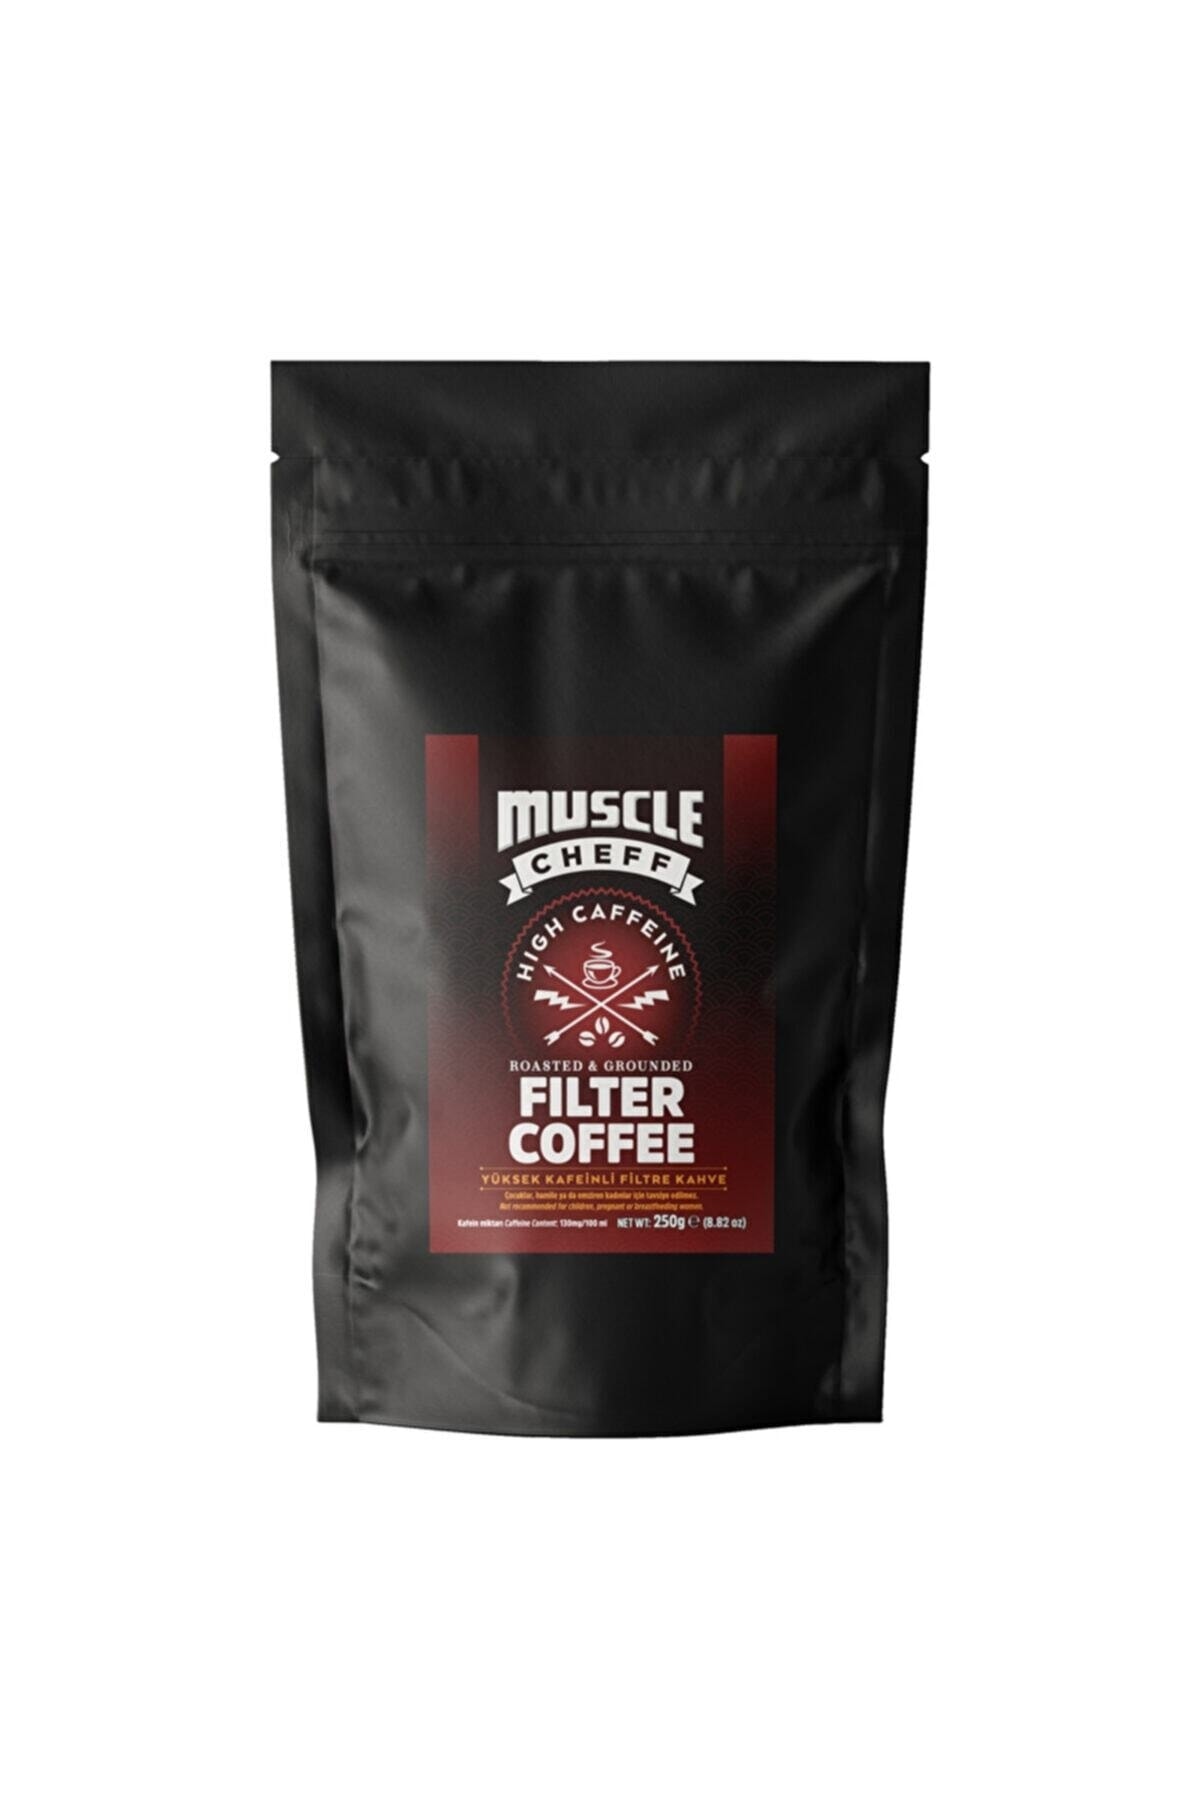 MUSCLE CHEFF High Caffeine Filter Coffee 250 Gr